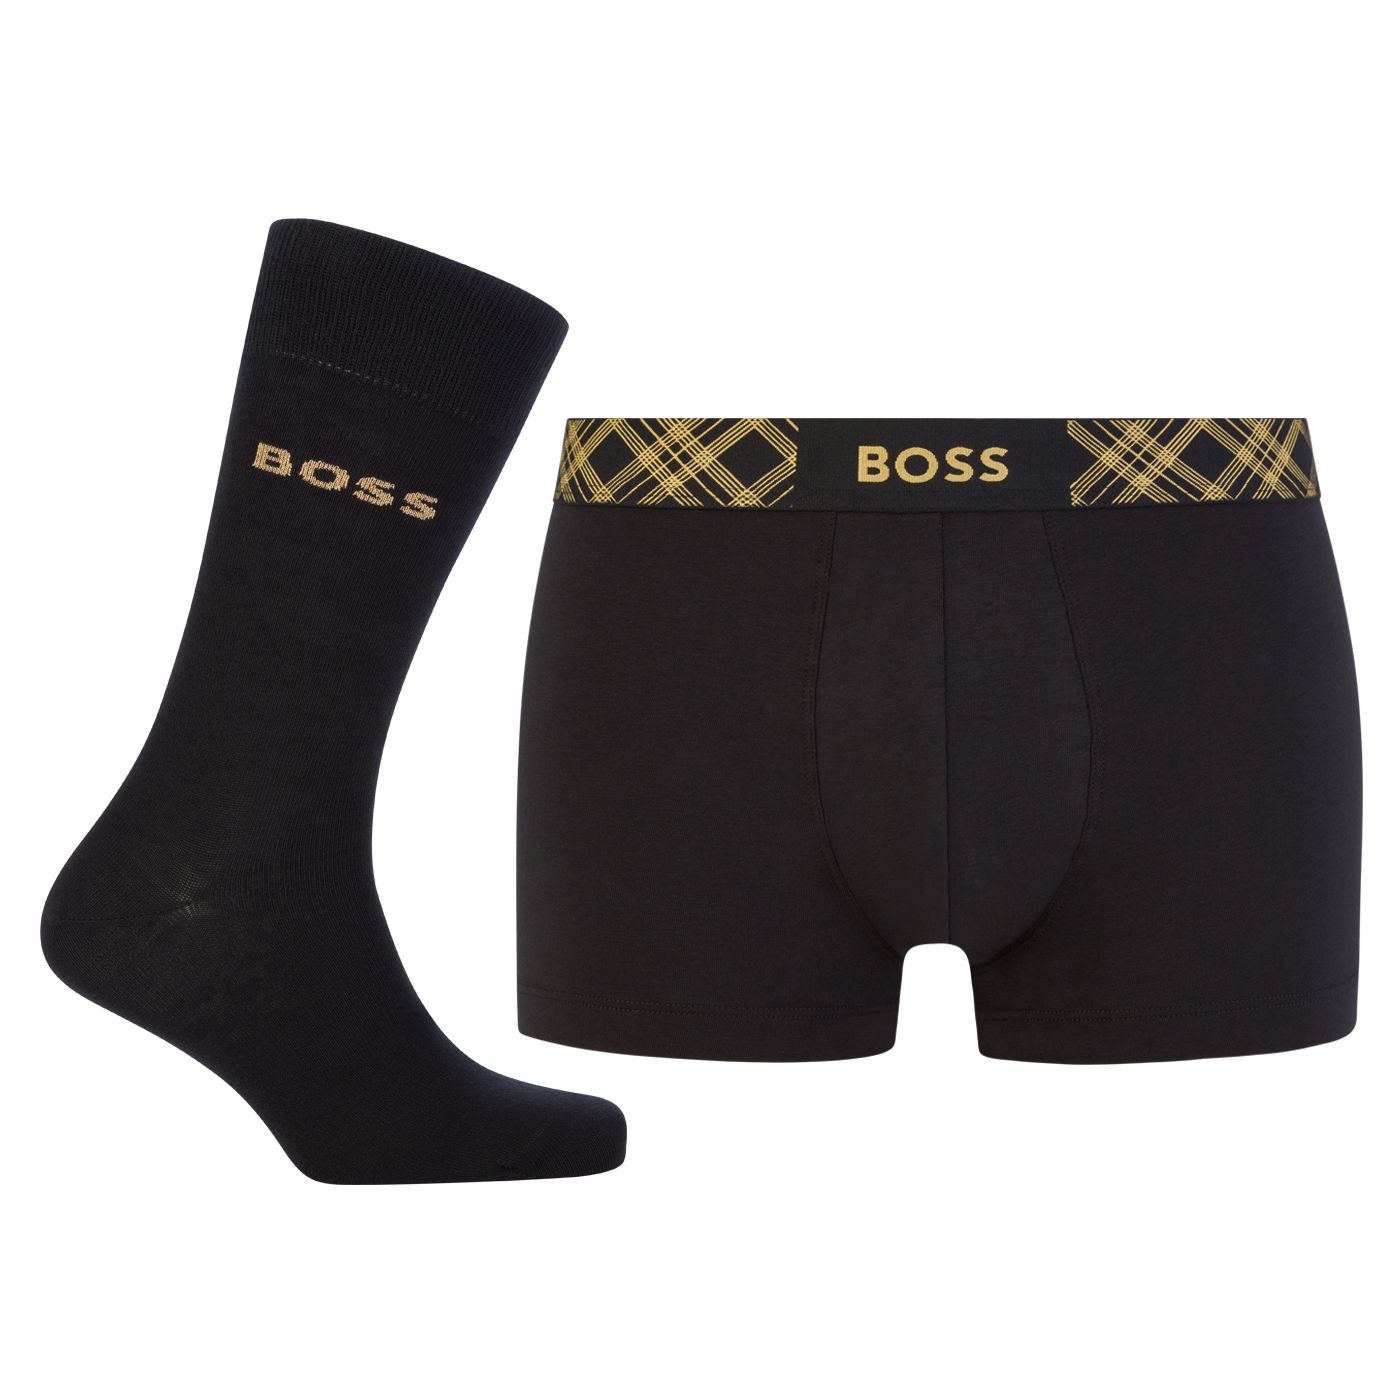 Hugo Boss Pánska sada - boxerky a ponožky BOSS 50500374-001 XL